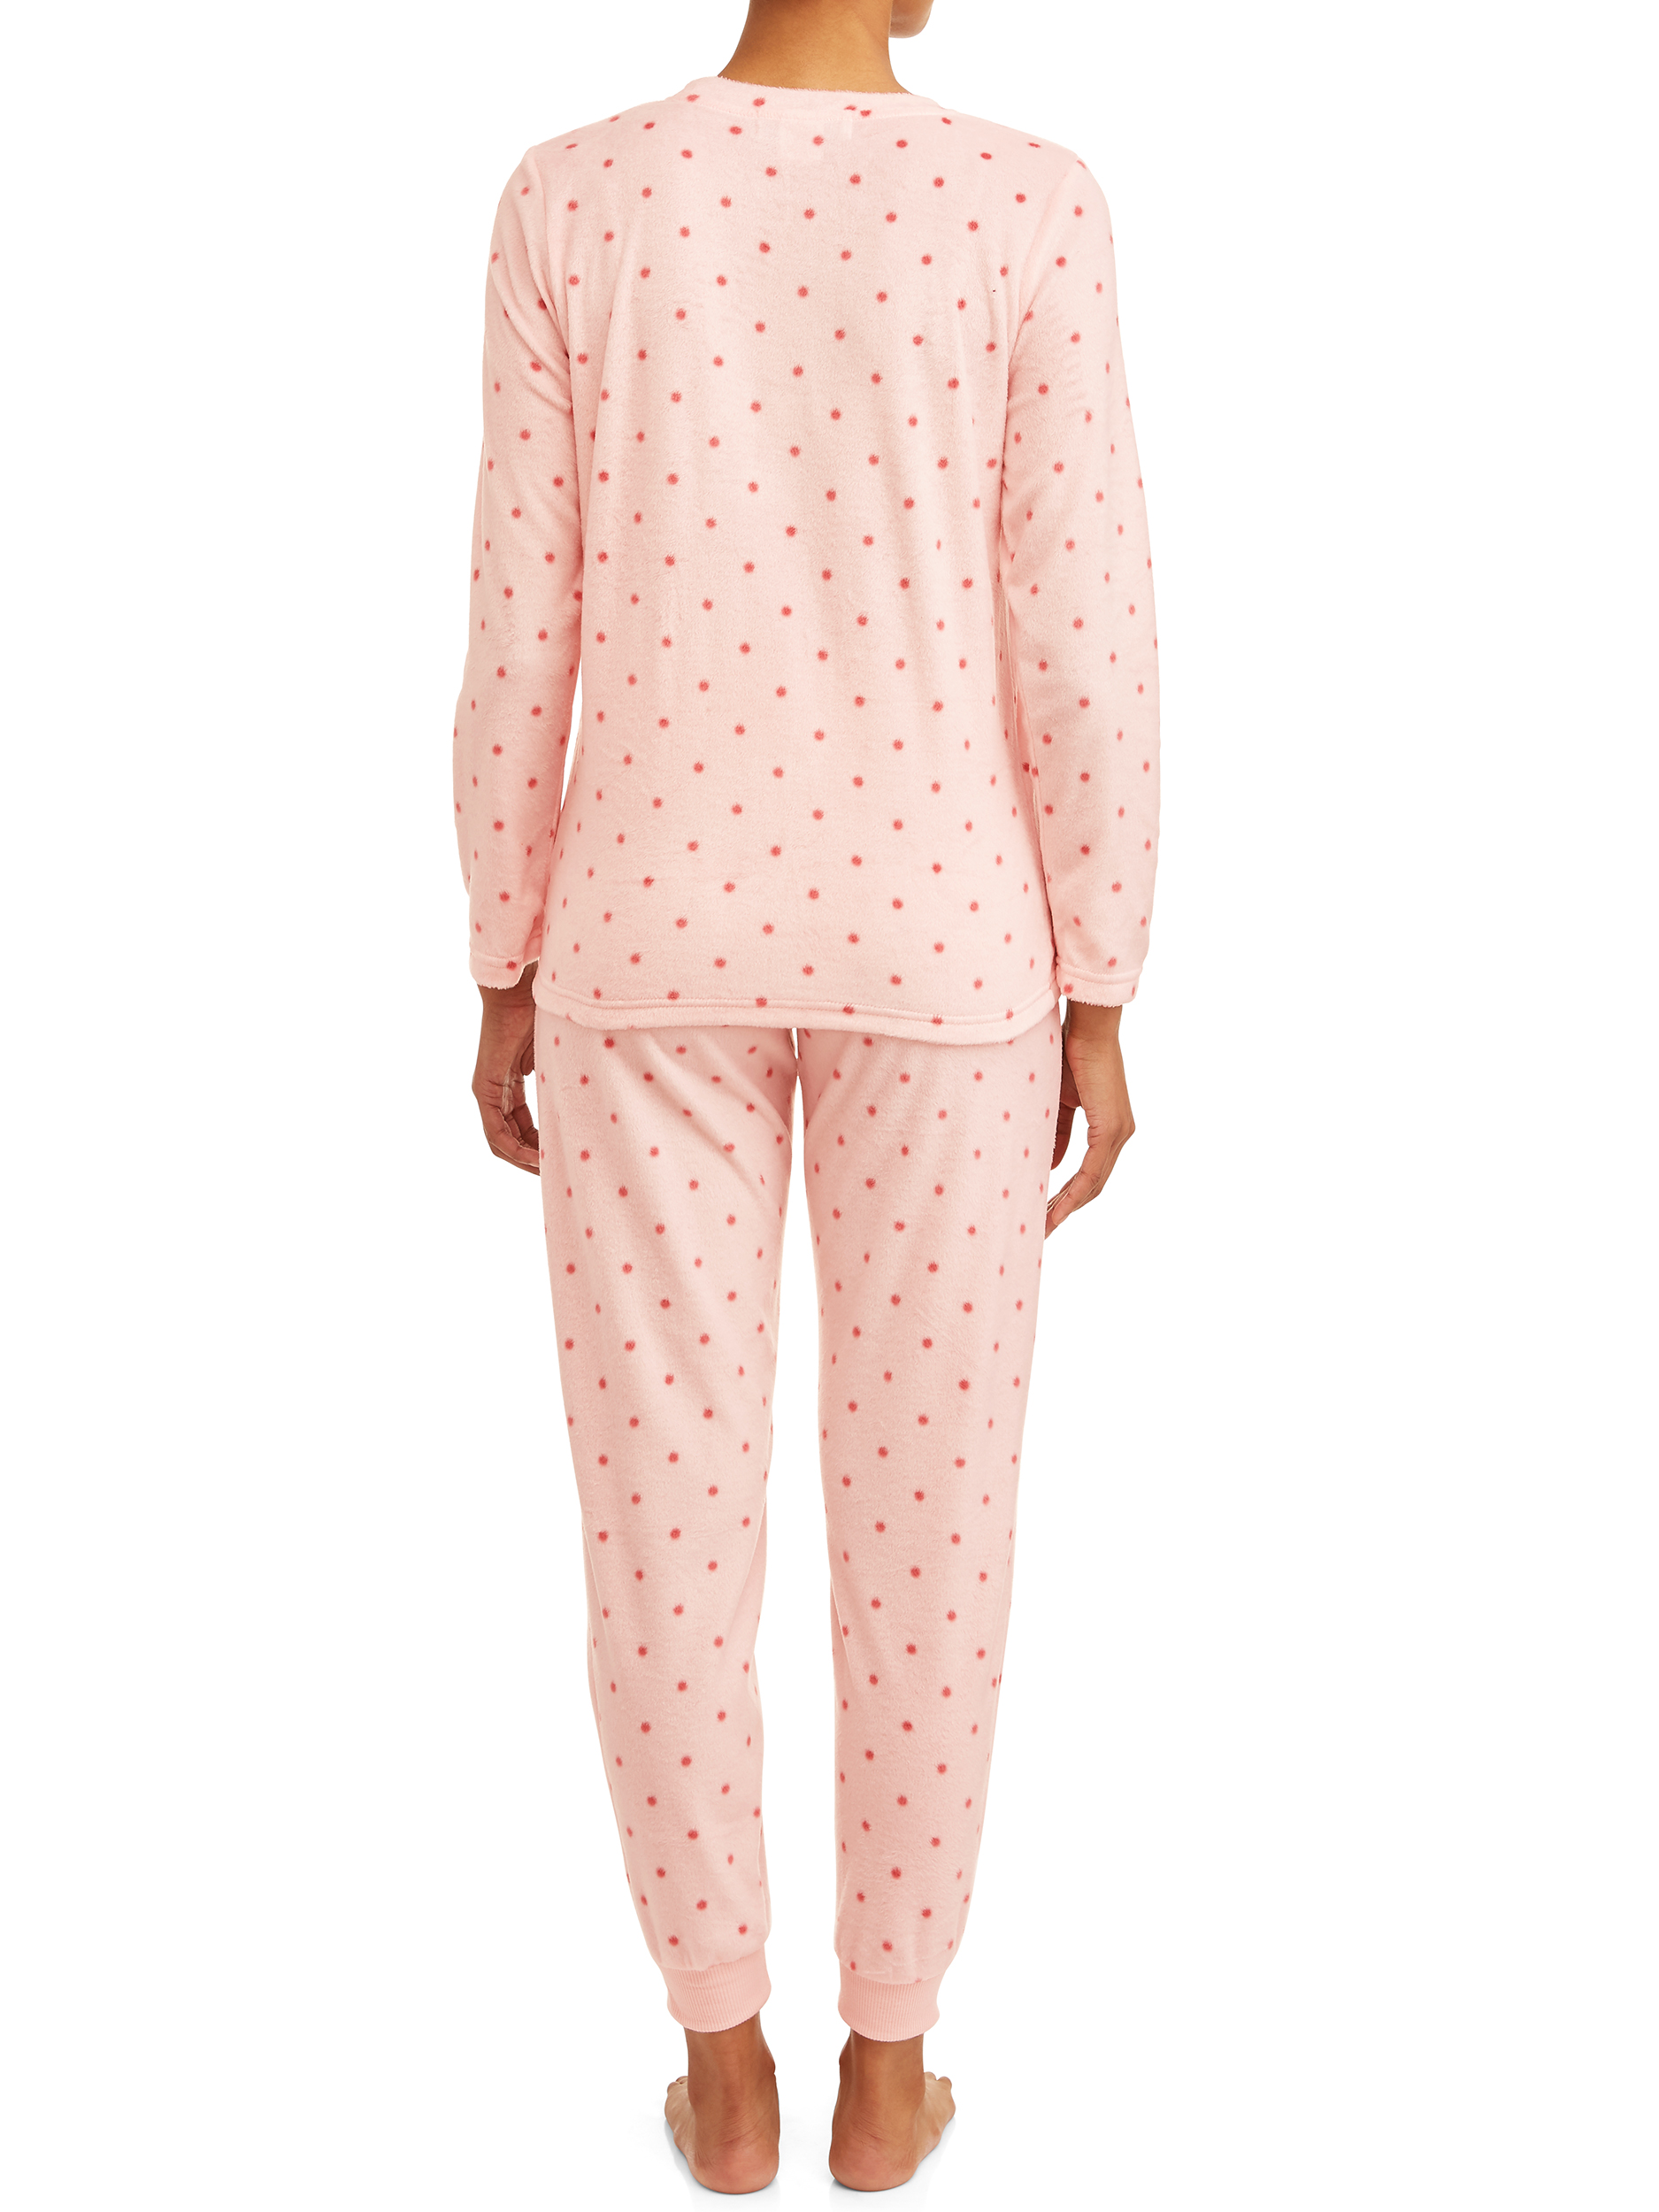 Cozy Critter Women's Super Plush Applique Character Pajama Set - image 3 of 3